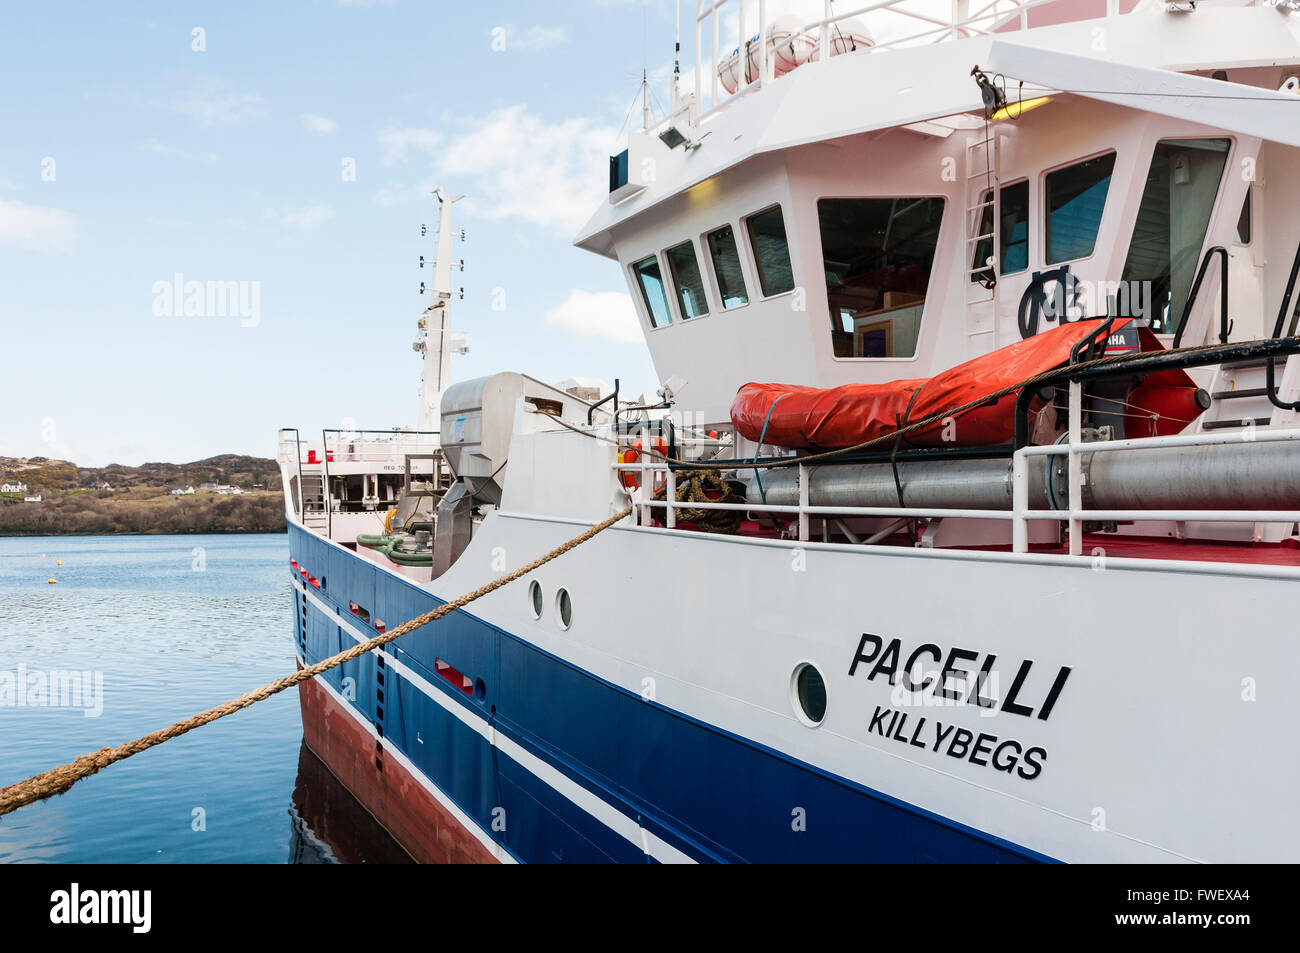 Pacelli ocean-going fishing trawler in Killybegs, Ireland. Stock Photo